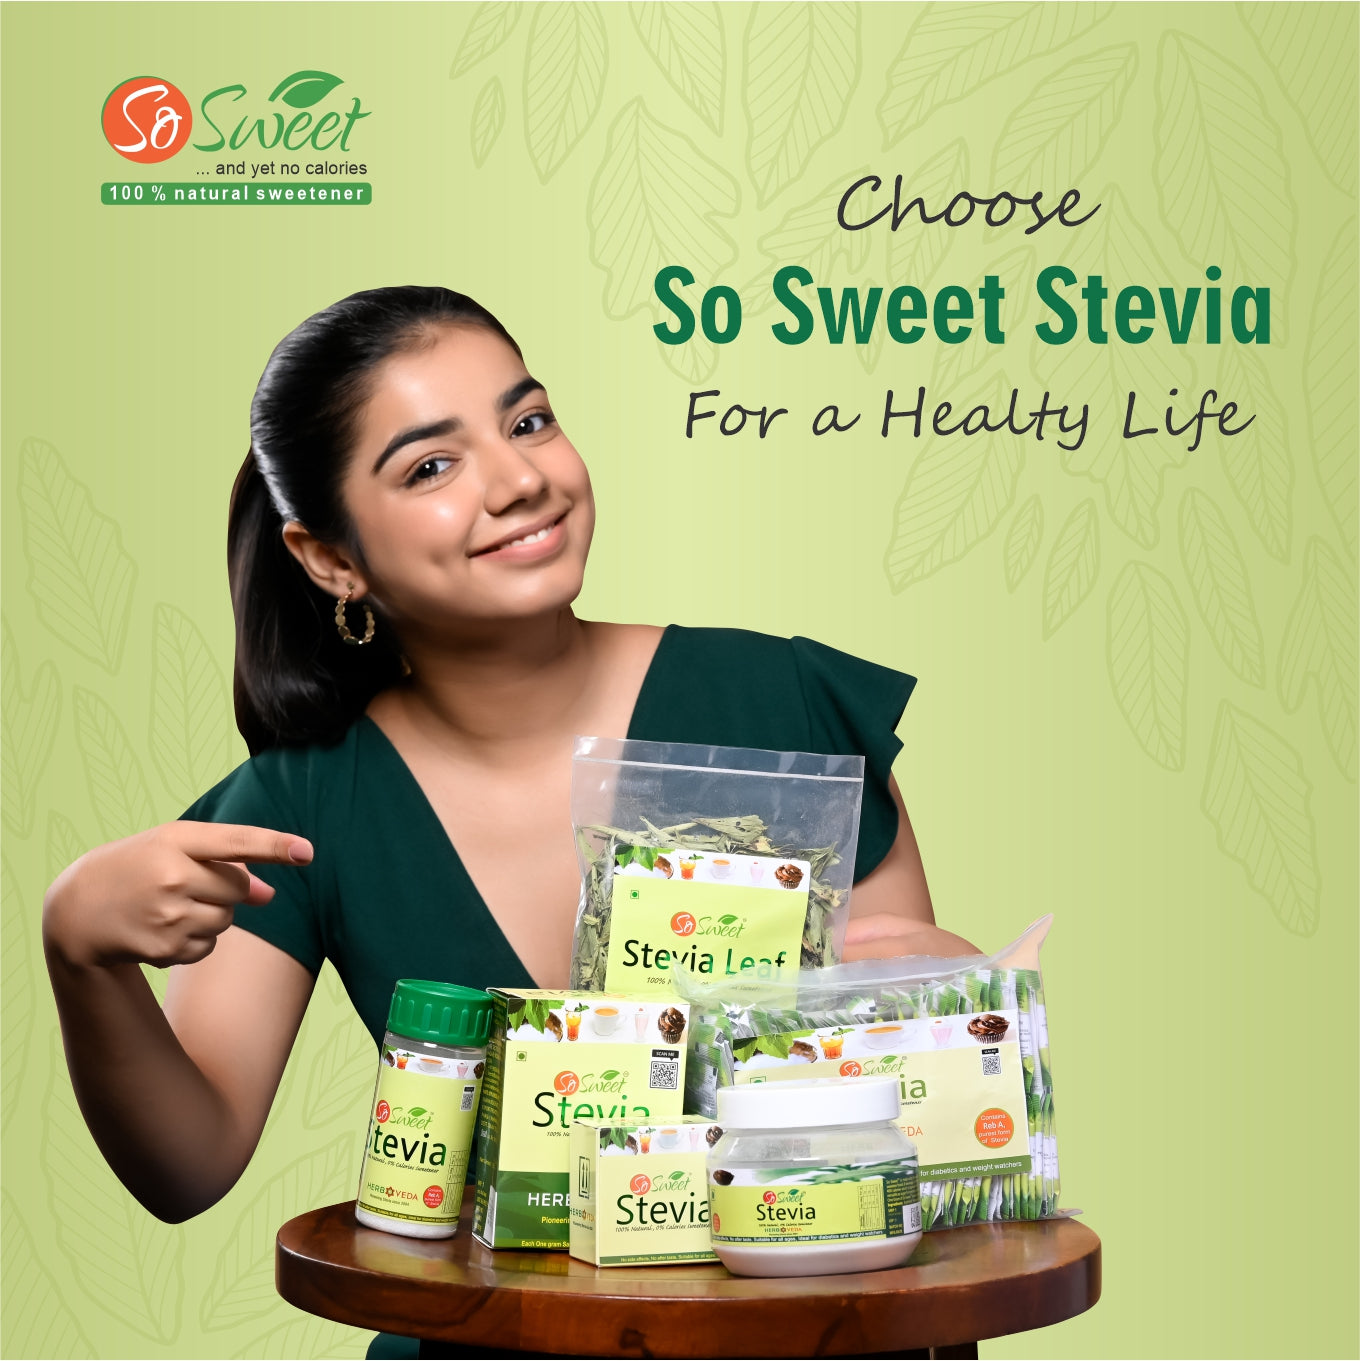 So Sweet Stevia Sugar Free Natural Low Calories Sweetener 100% Natural 400Gm | Diebetic Friendly-Pack of 4